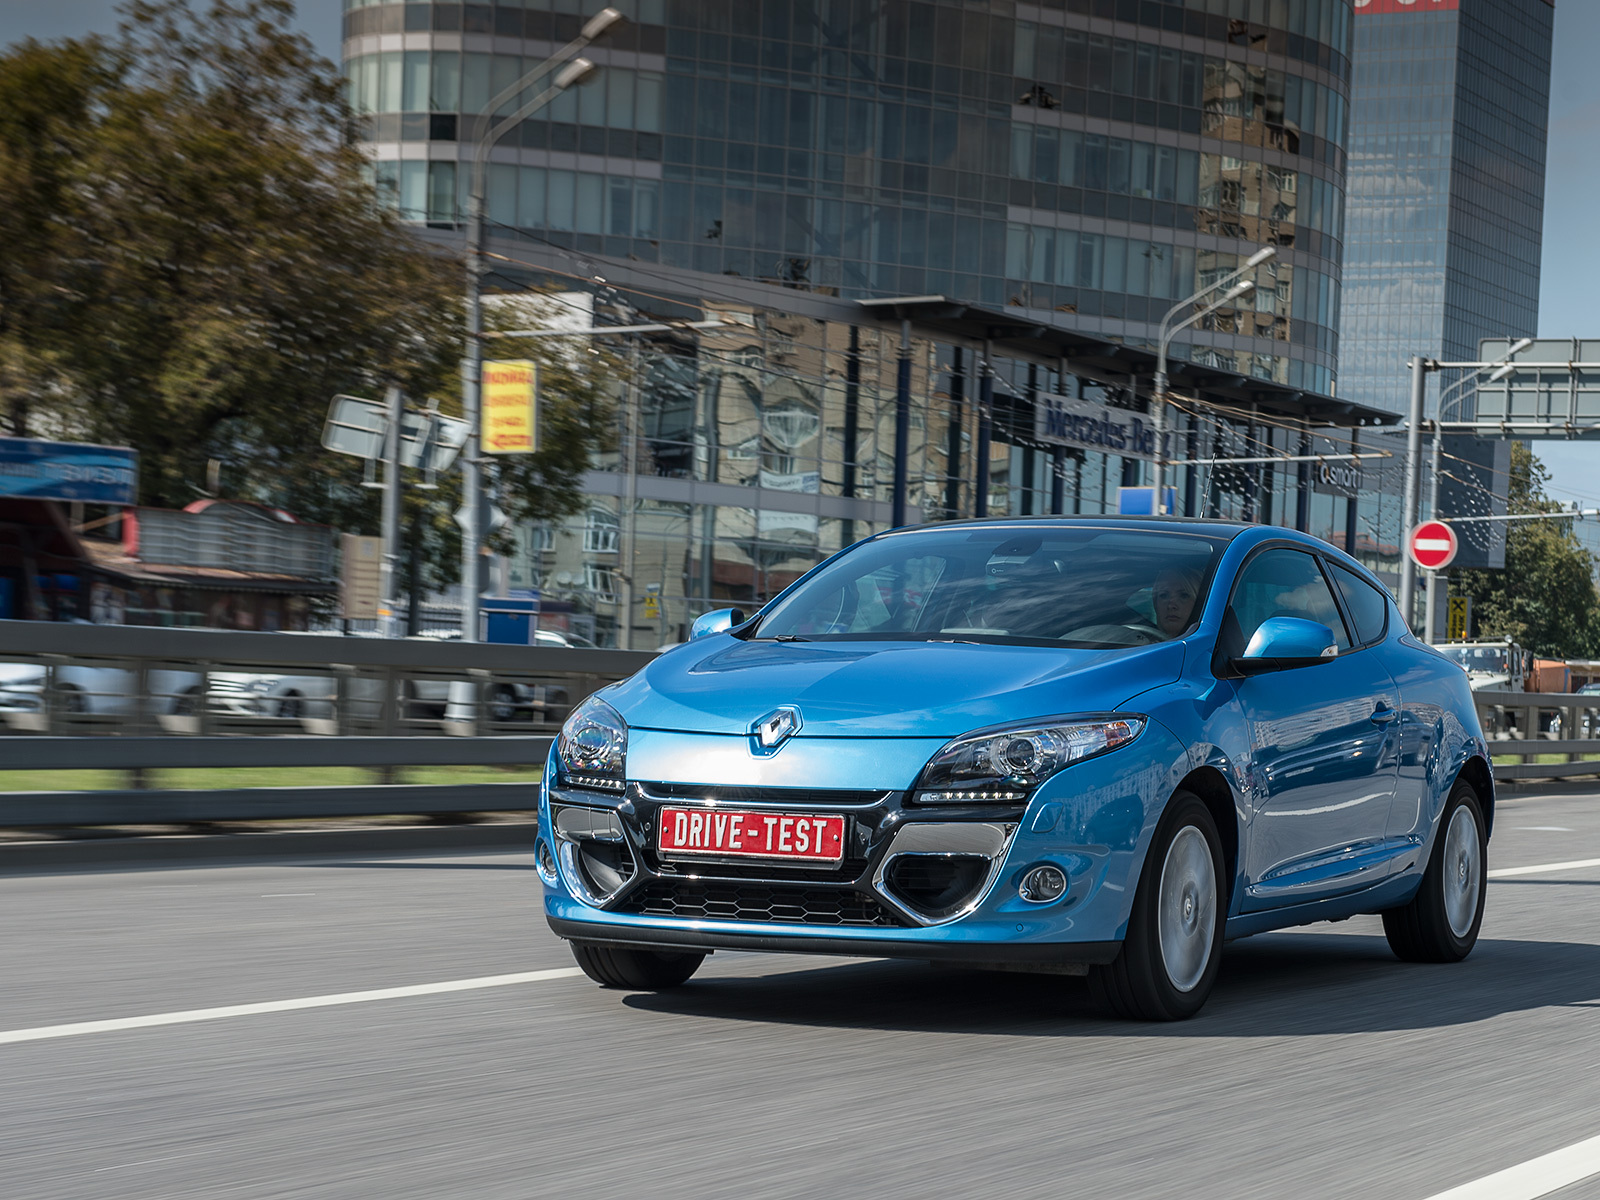   Kia pro_ceed  Renault Megane Coupe   3D